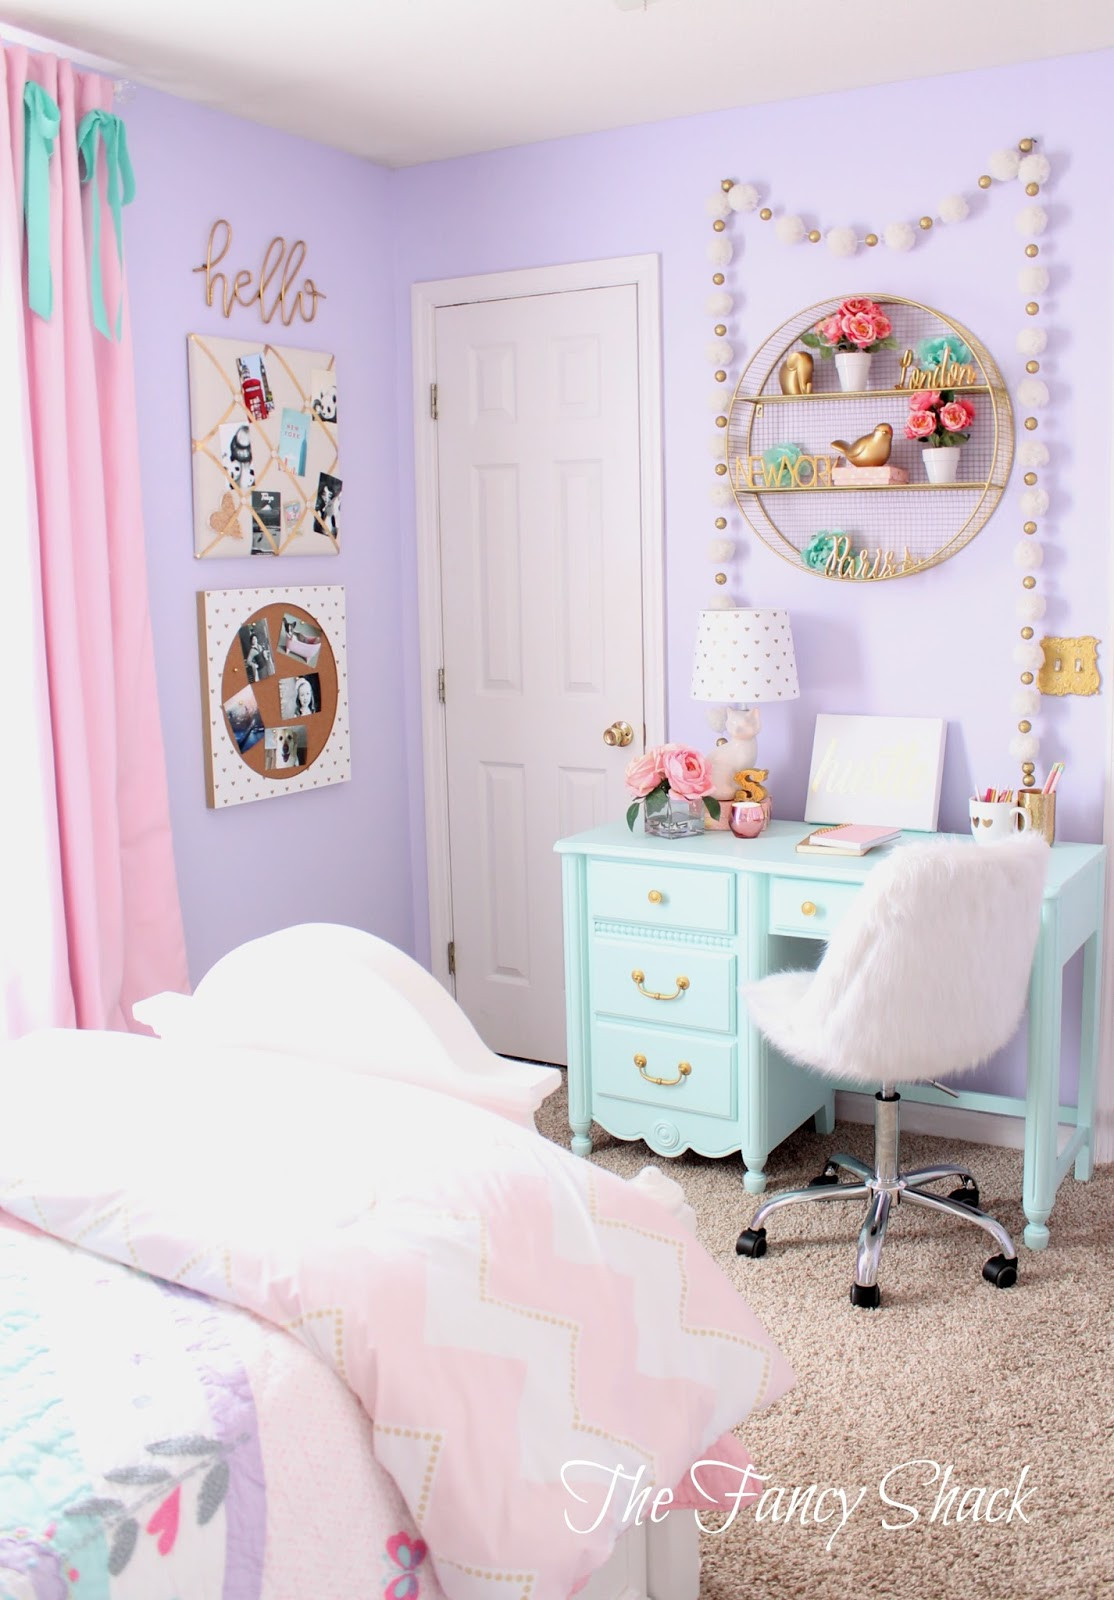 Cute Bedroom Decor
 The Fancy Shack Pastel Girls Room Makeover